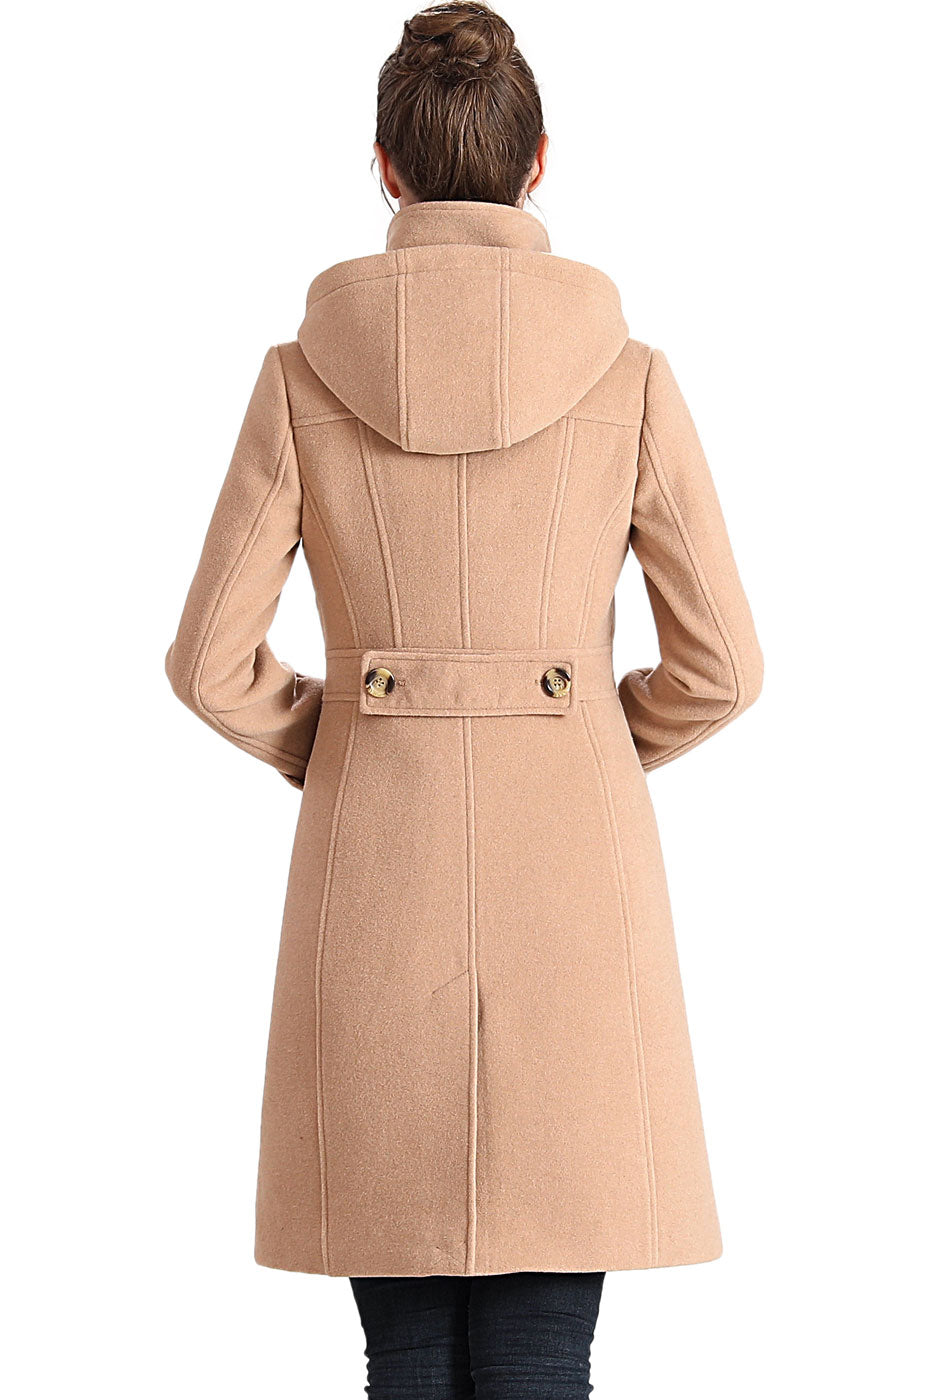 BGSD Women Jem Stand-Collar Wool Coat